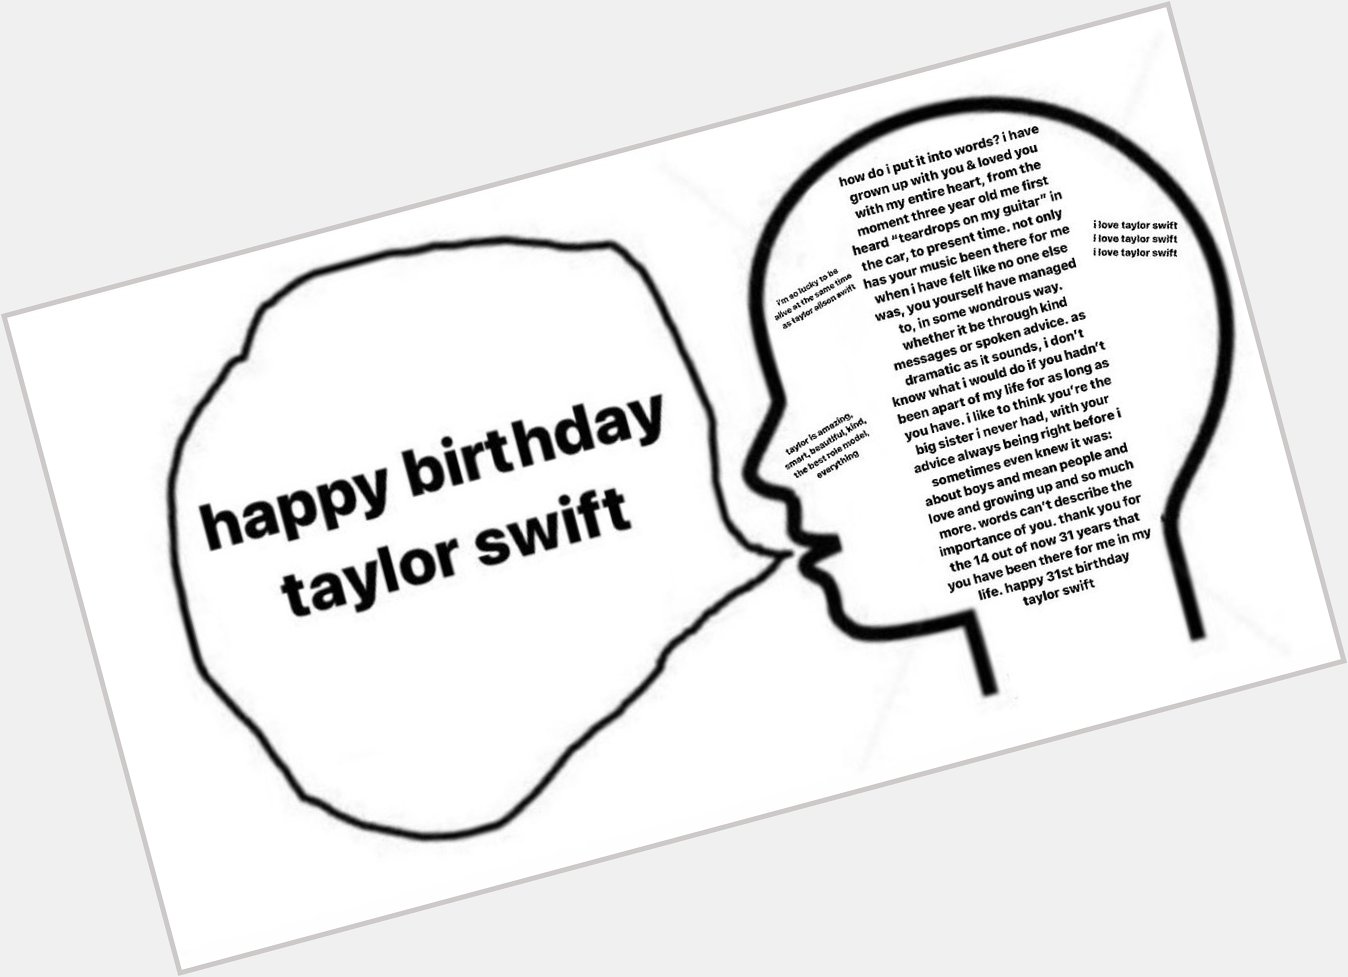 Yup happy birthday taylor swift 